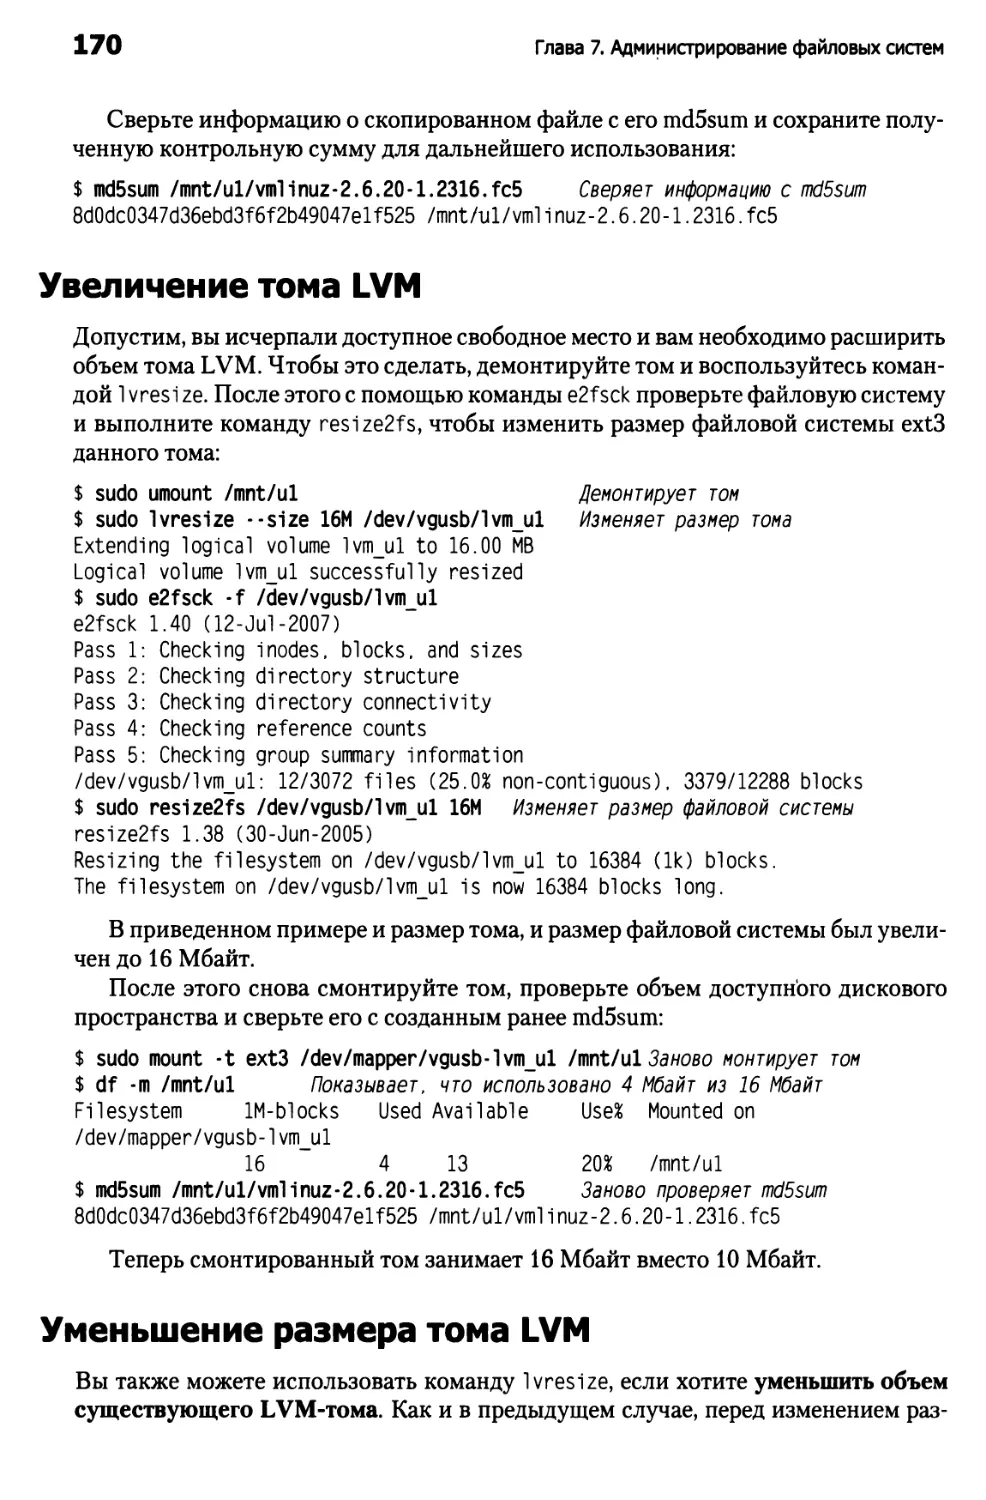 Увеличение тома LVM
Уменьшение размера тома LVM